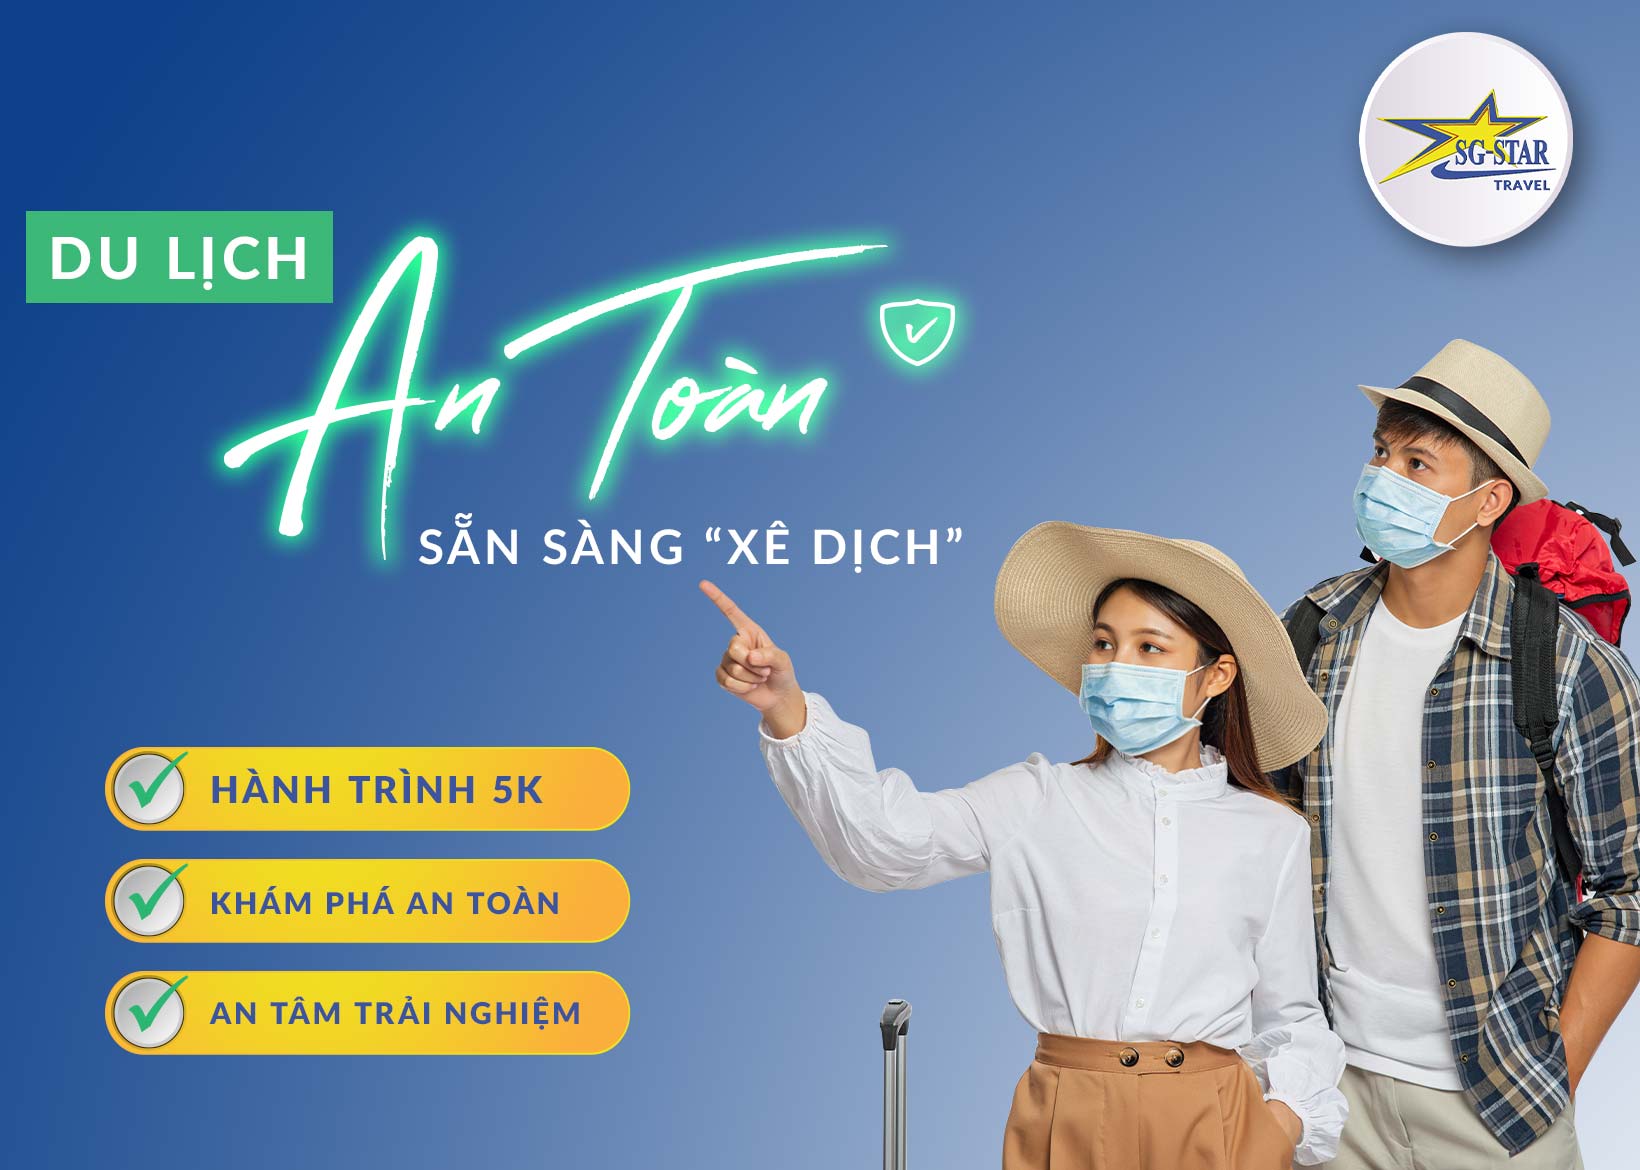 Du lịch an toàn cùng Saigon Star Travel